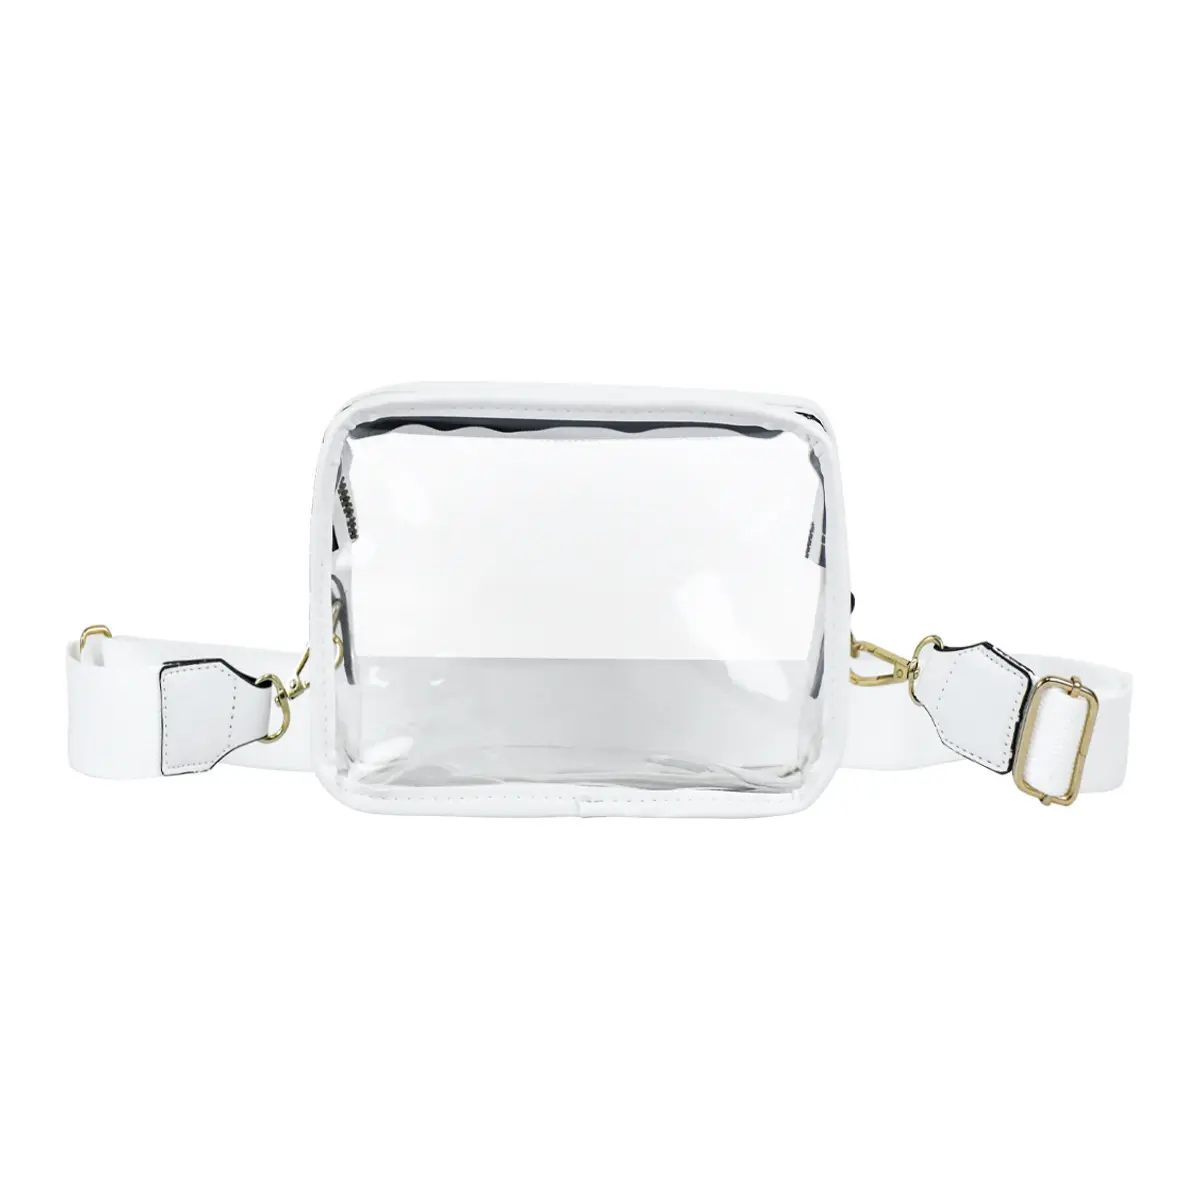 Portable PVC Crossbody Bag for Women Transparent Shoulder Bag with Waterproof Design for Beach Activities